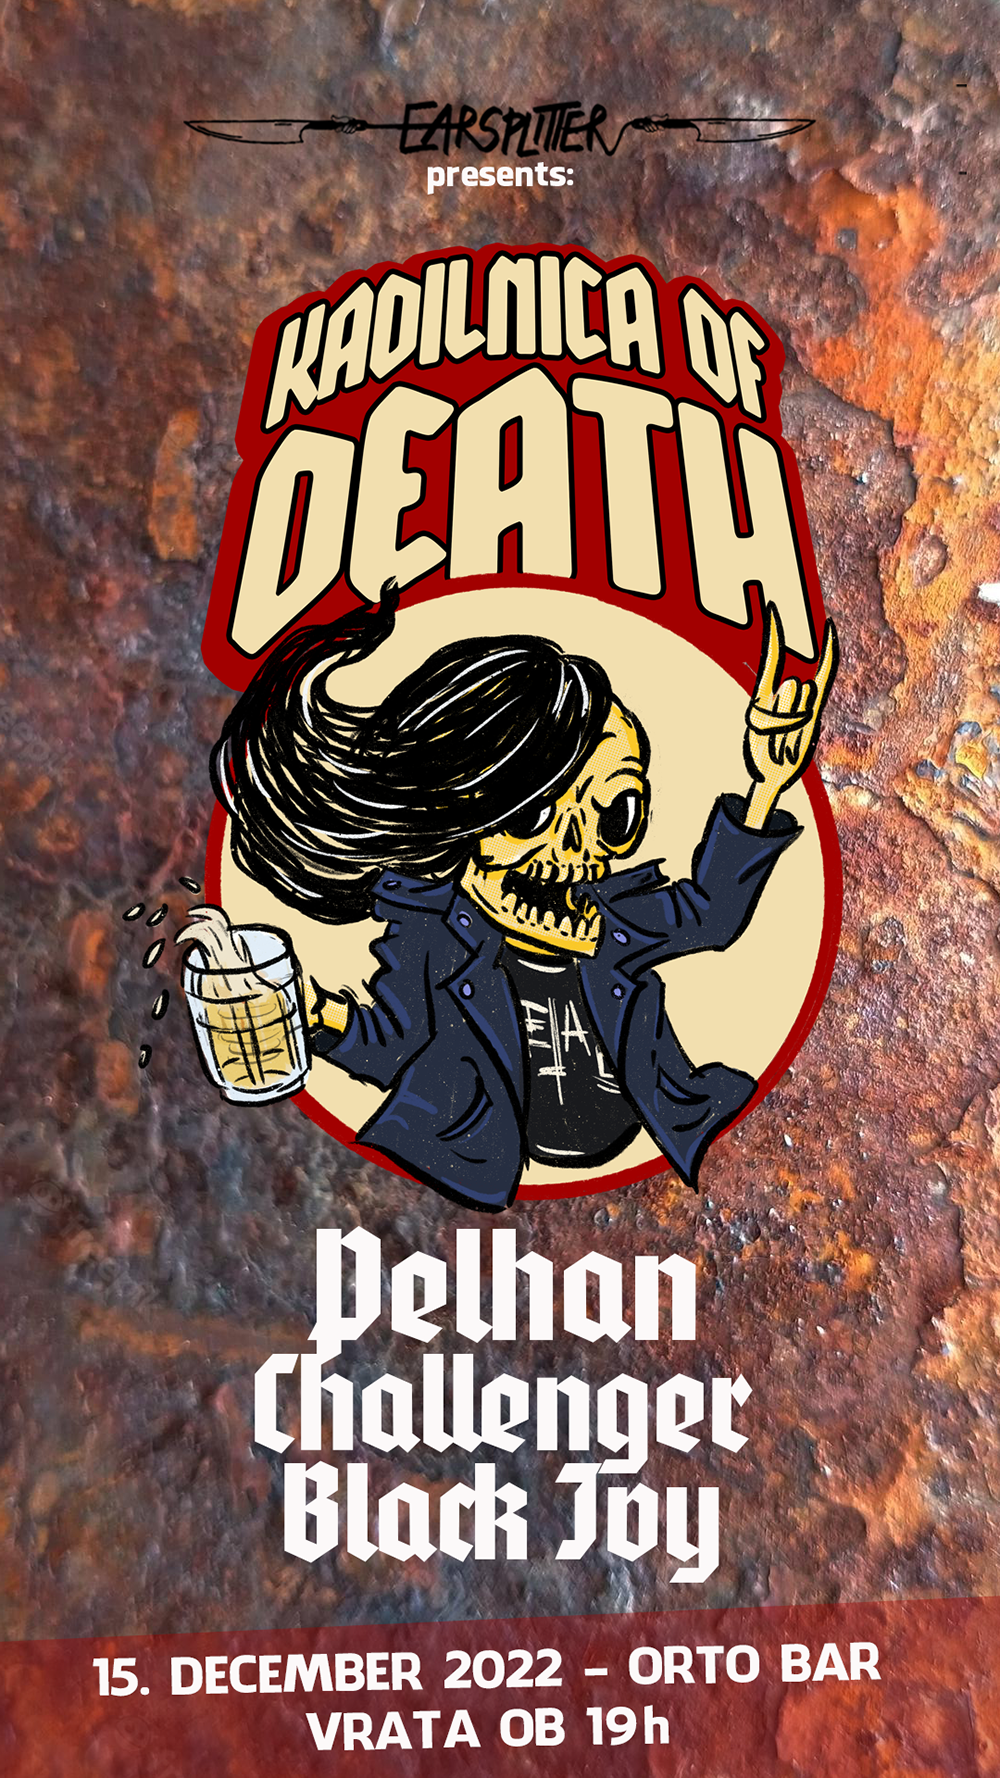 15.12.2022 - Kadilnica of Death: Pelhan (Slo), Challenger (Slo), Black Ivy (Slo) @ Orto Bar, Ljubljana